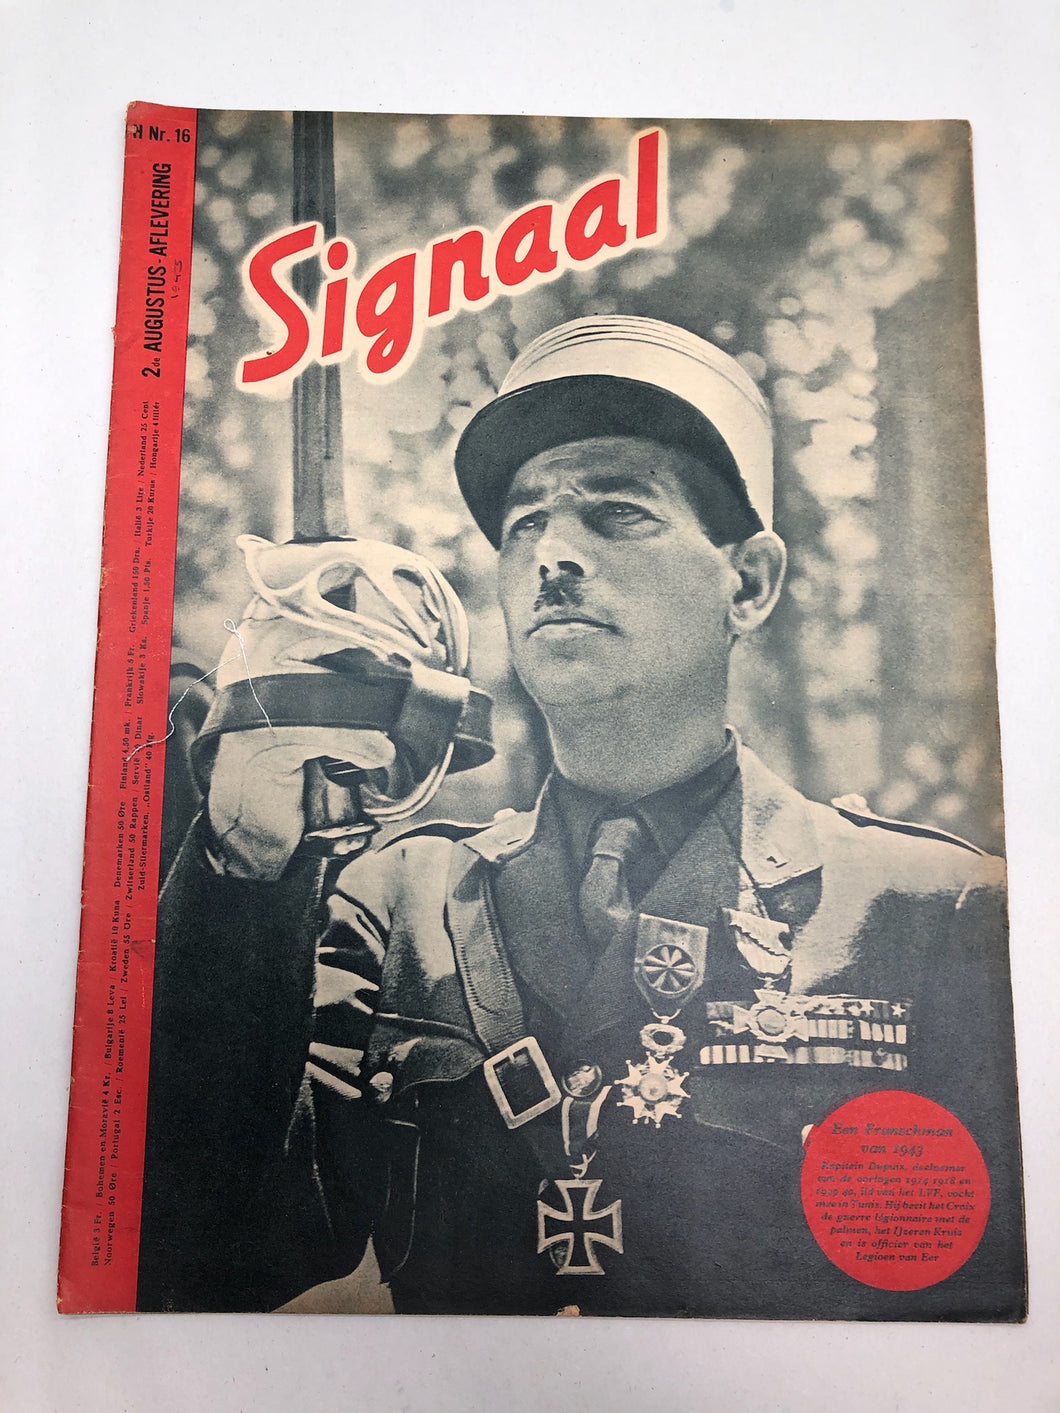 Original Dutch Language WW2 Propaganda Signaal Magazine - No.16 1943